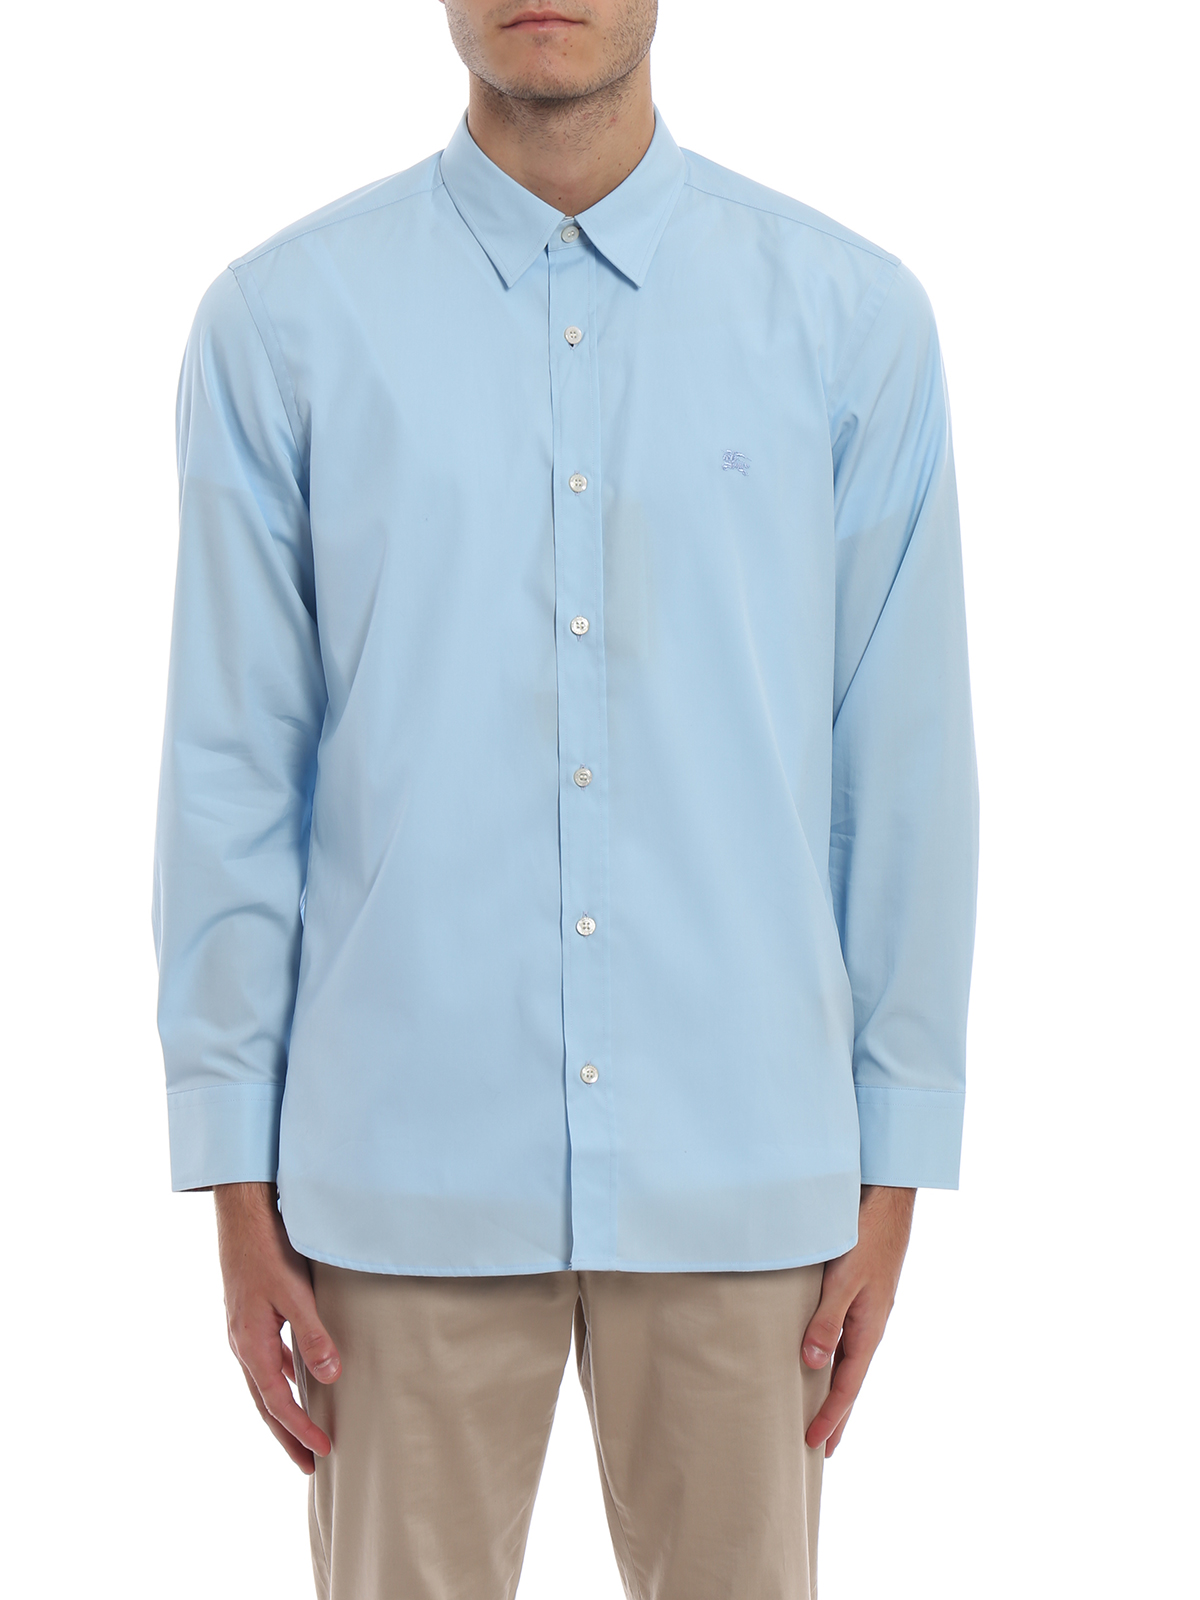 Shirts Burberry - William pale blue poplin shirt - 8003072 